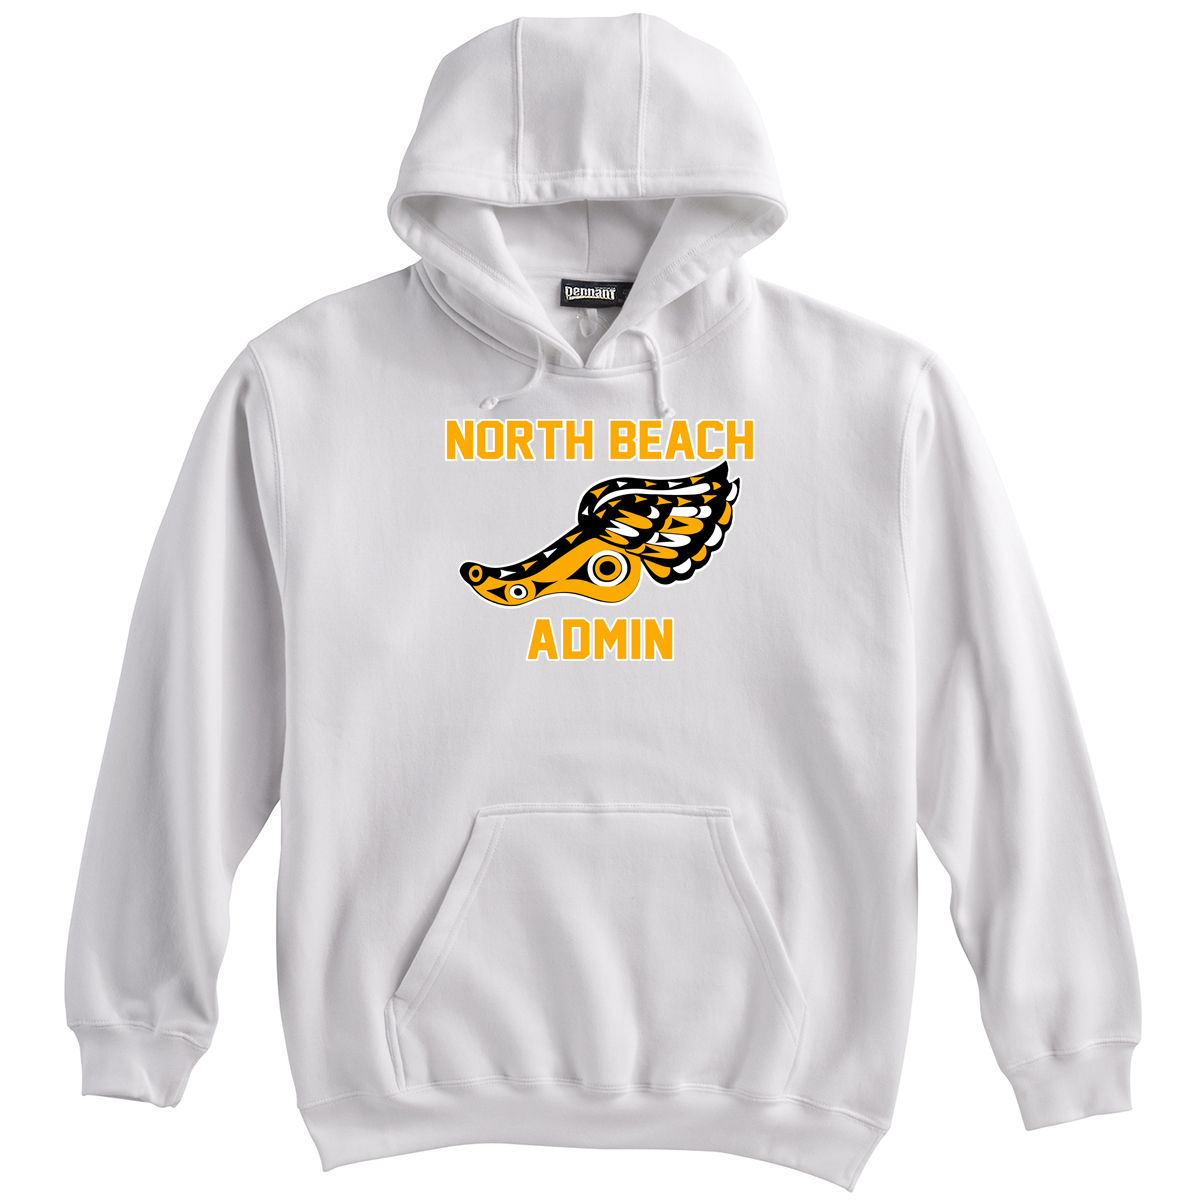 North Beach Admin Sweatshirt